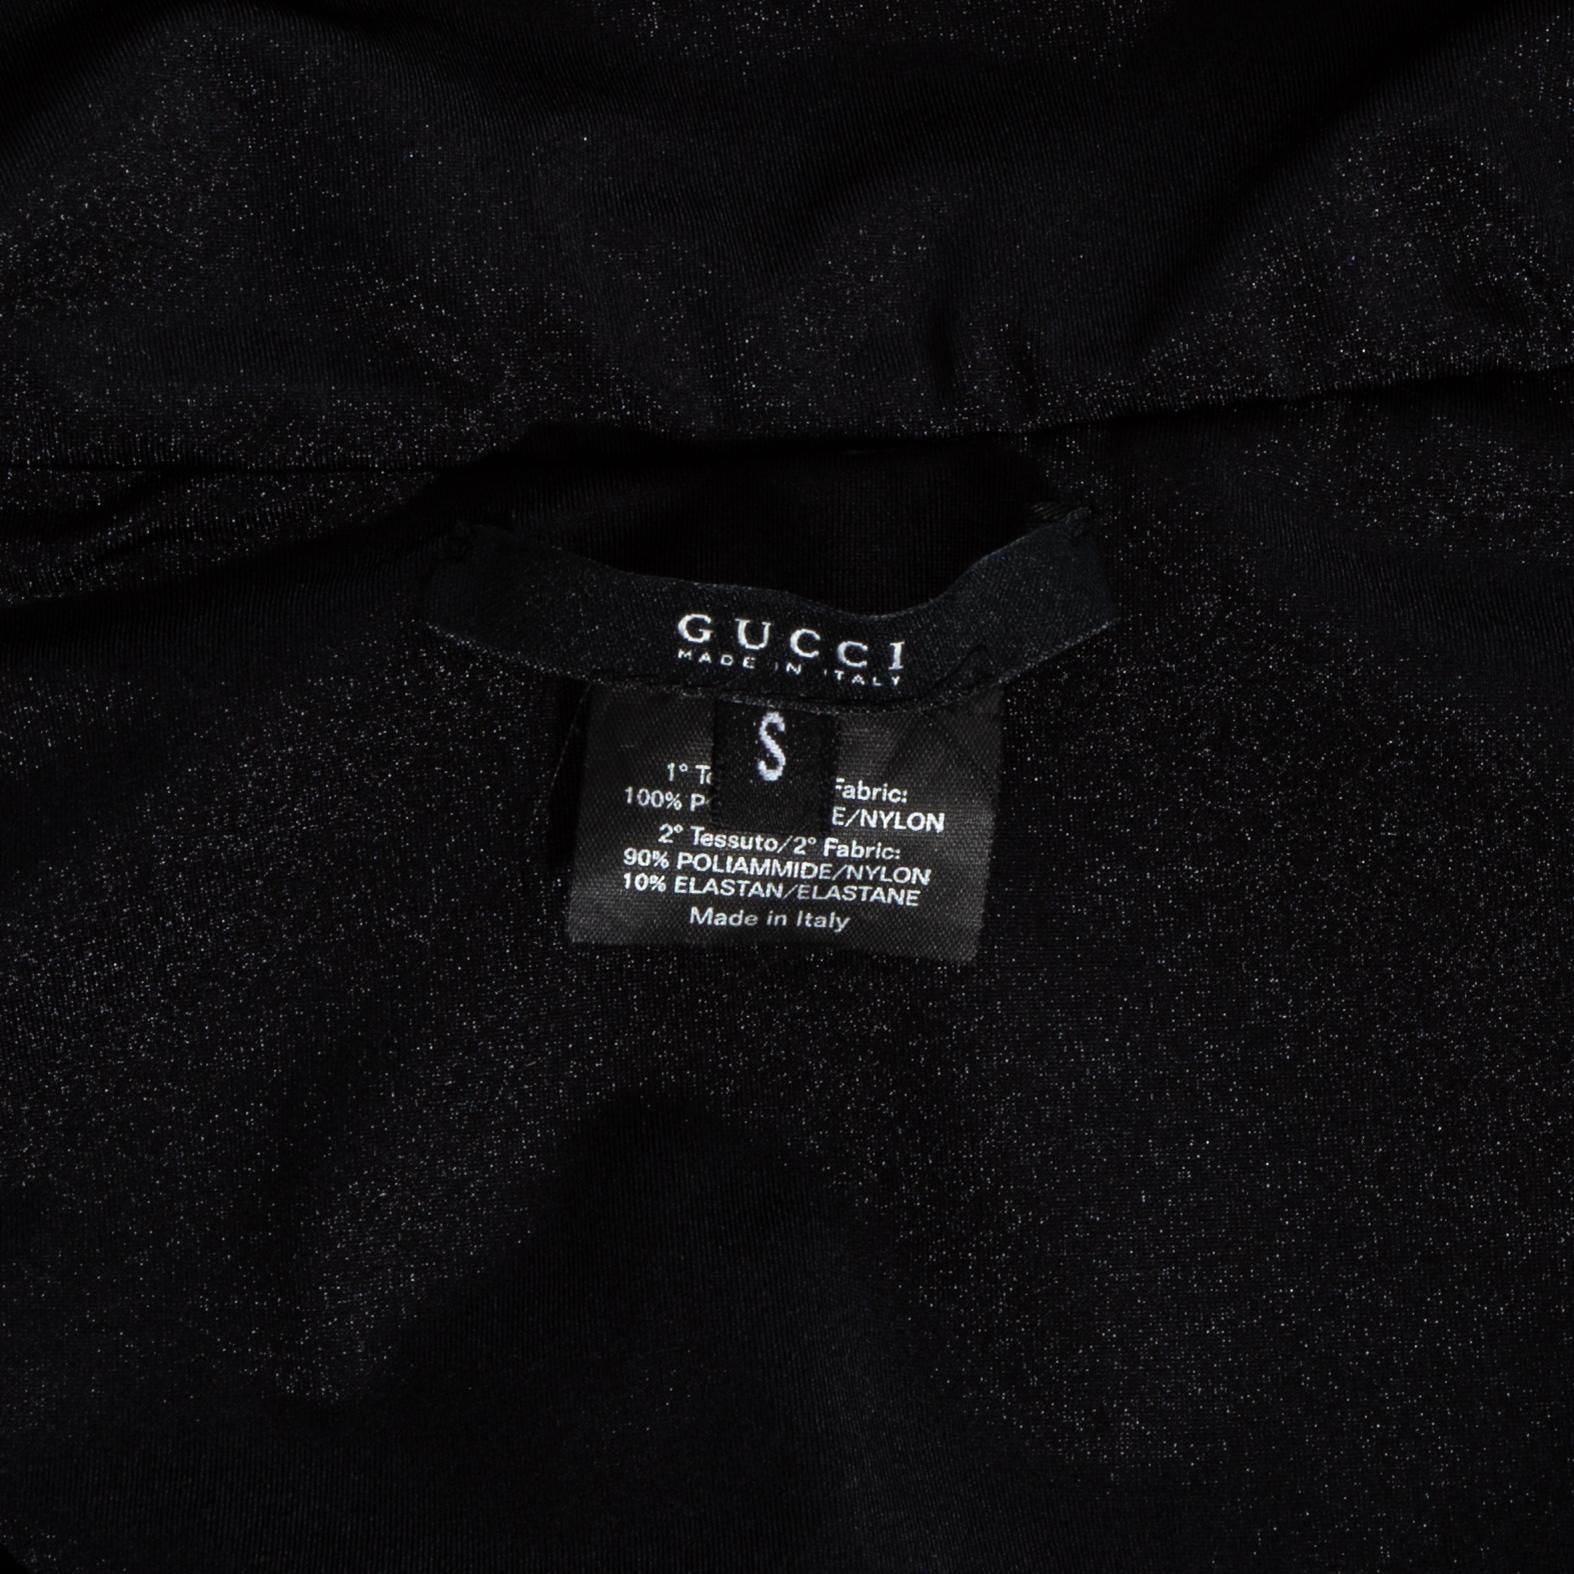 Gucci black bandage bodysuit, ss 2005 1